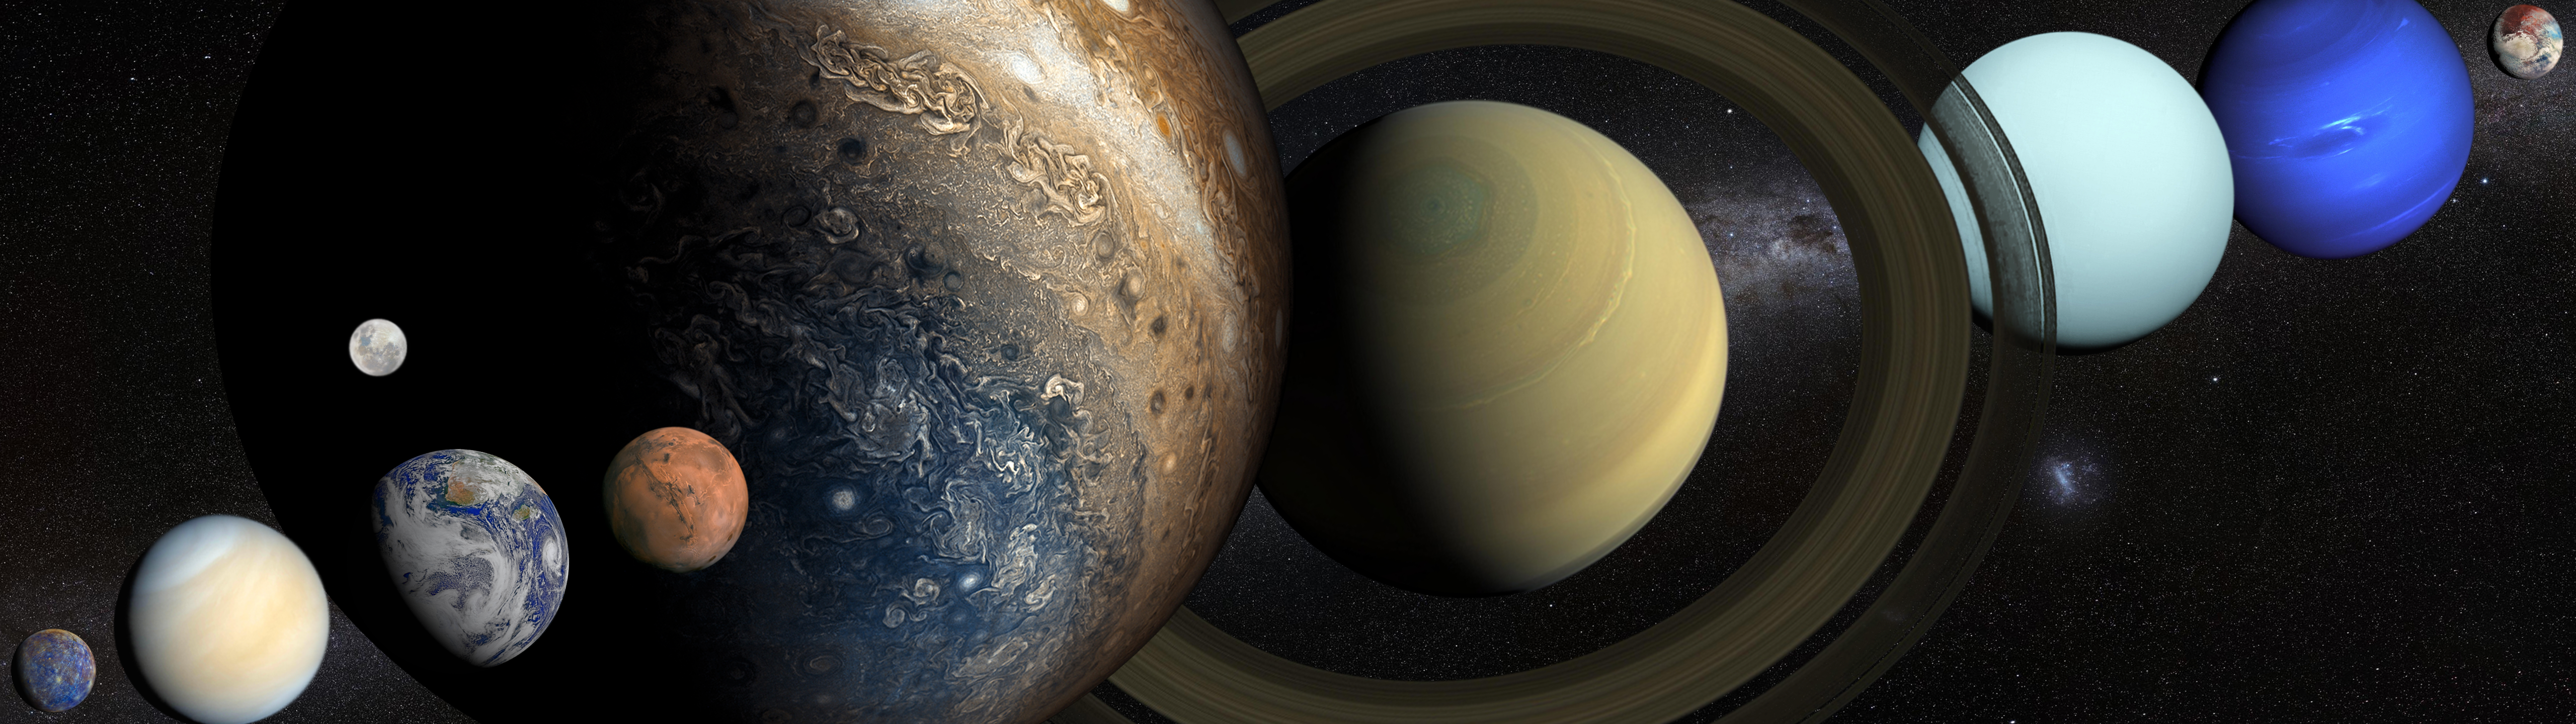 Solar System Venus Neptune Mercury Jupiter Saturn Uranus Earth Mars Pluto Milky Way Moon Space 5120x1440